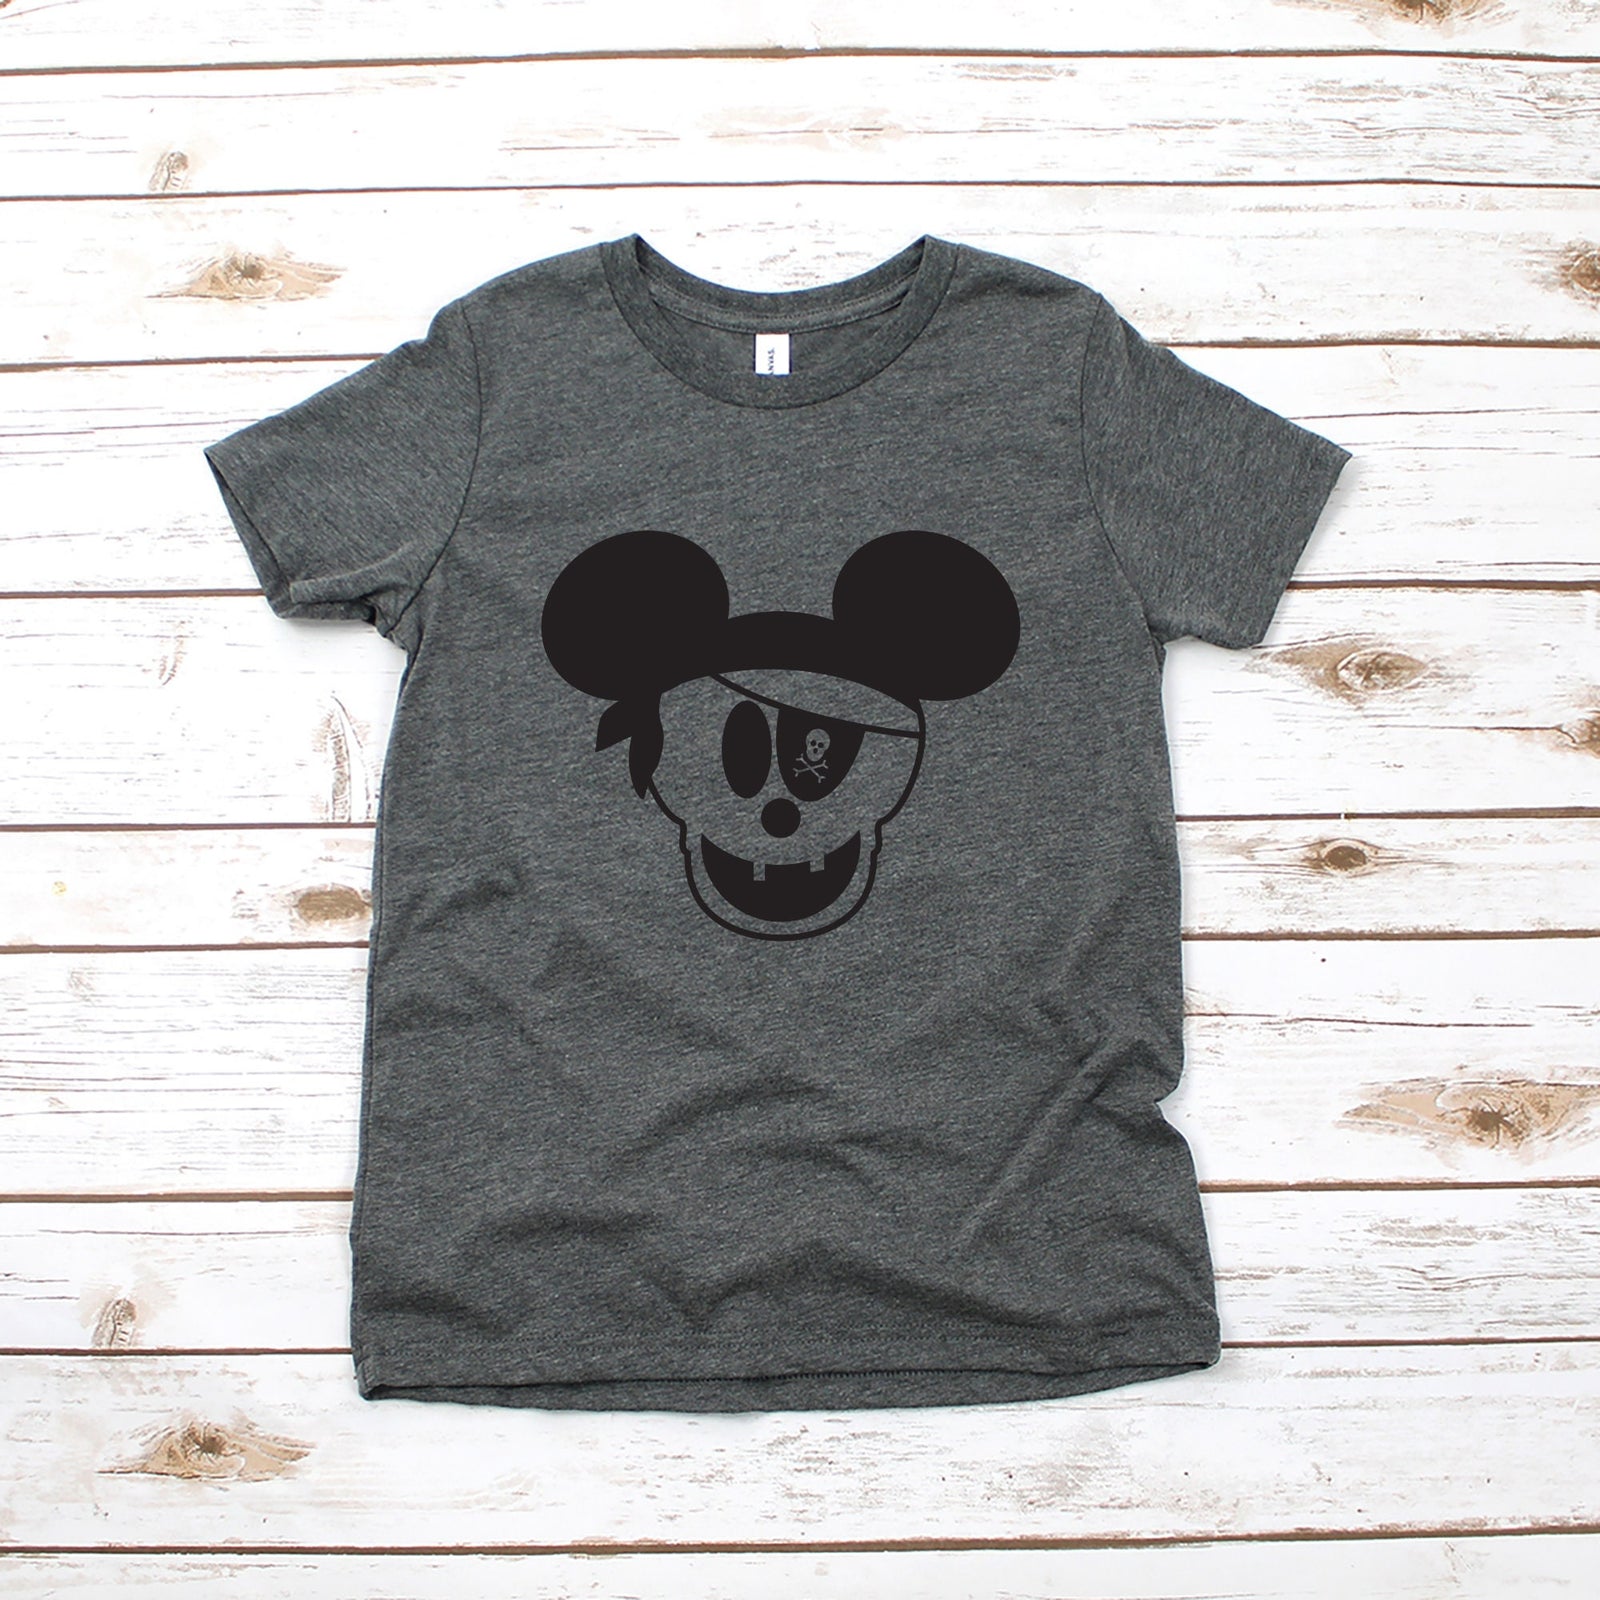 Pirate Skull Mickey Mouse Youth T Shirt - Disney Kids Mickey T Shirts - Disney Matching Family Shirts - Ahoy - Pirate's Life